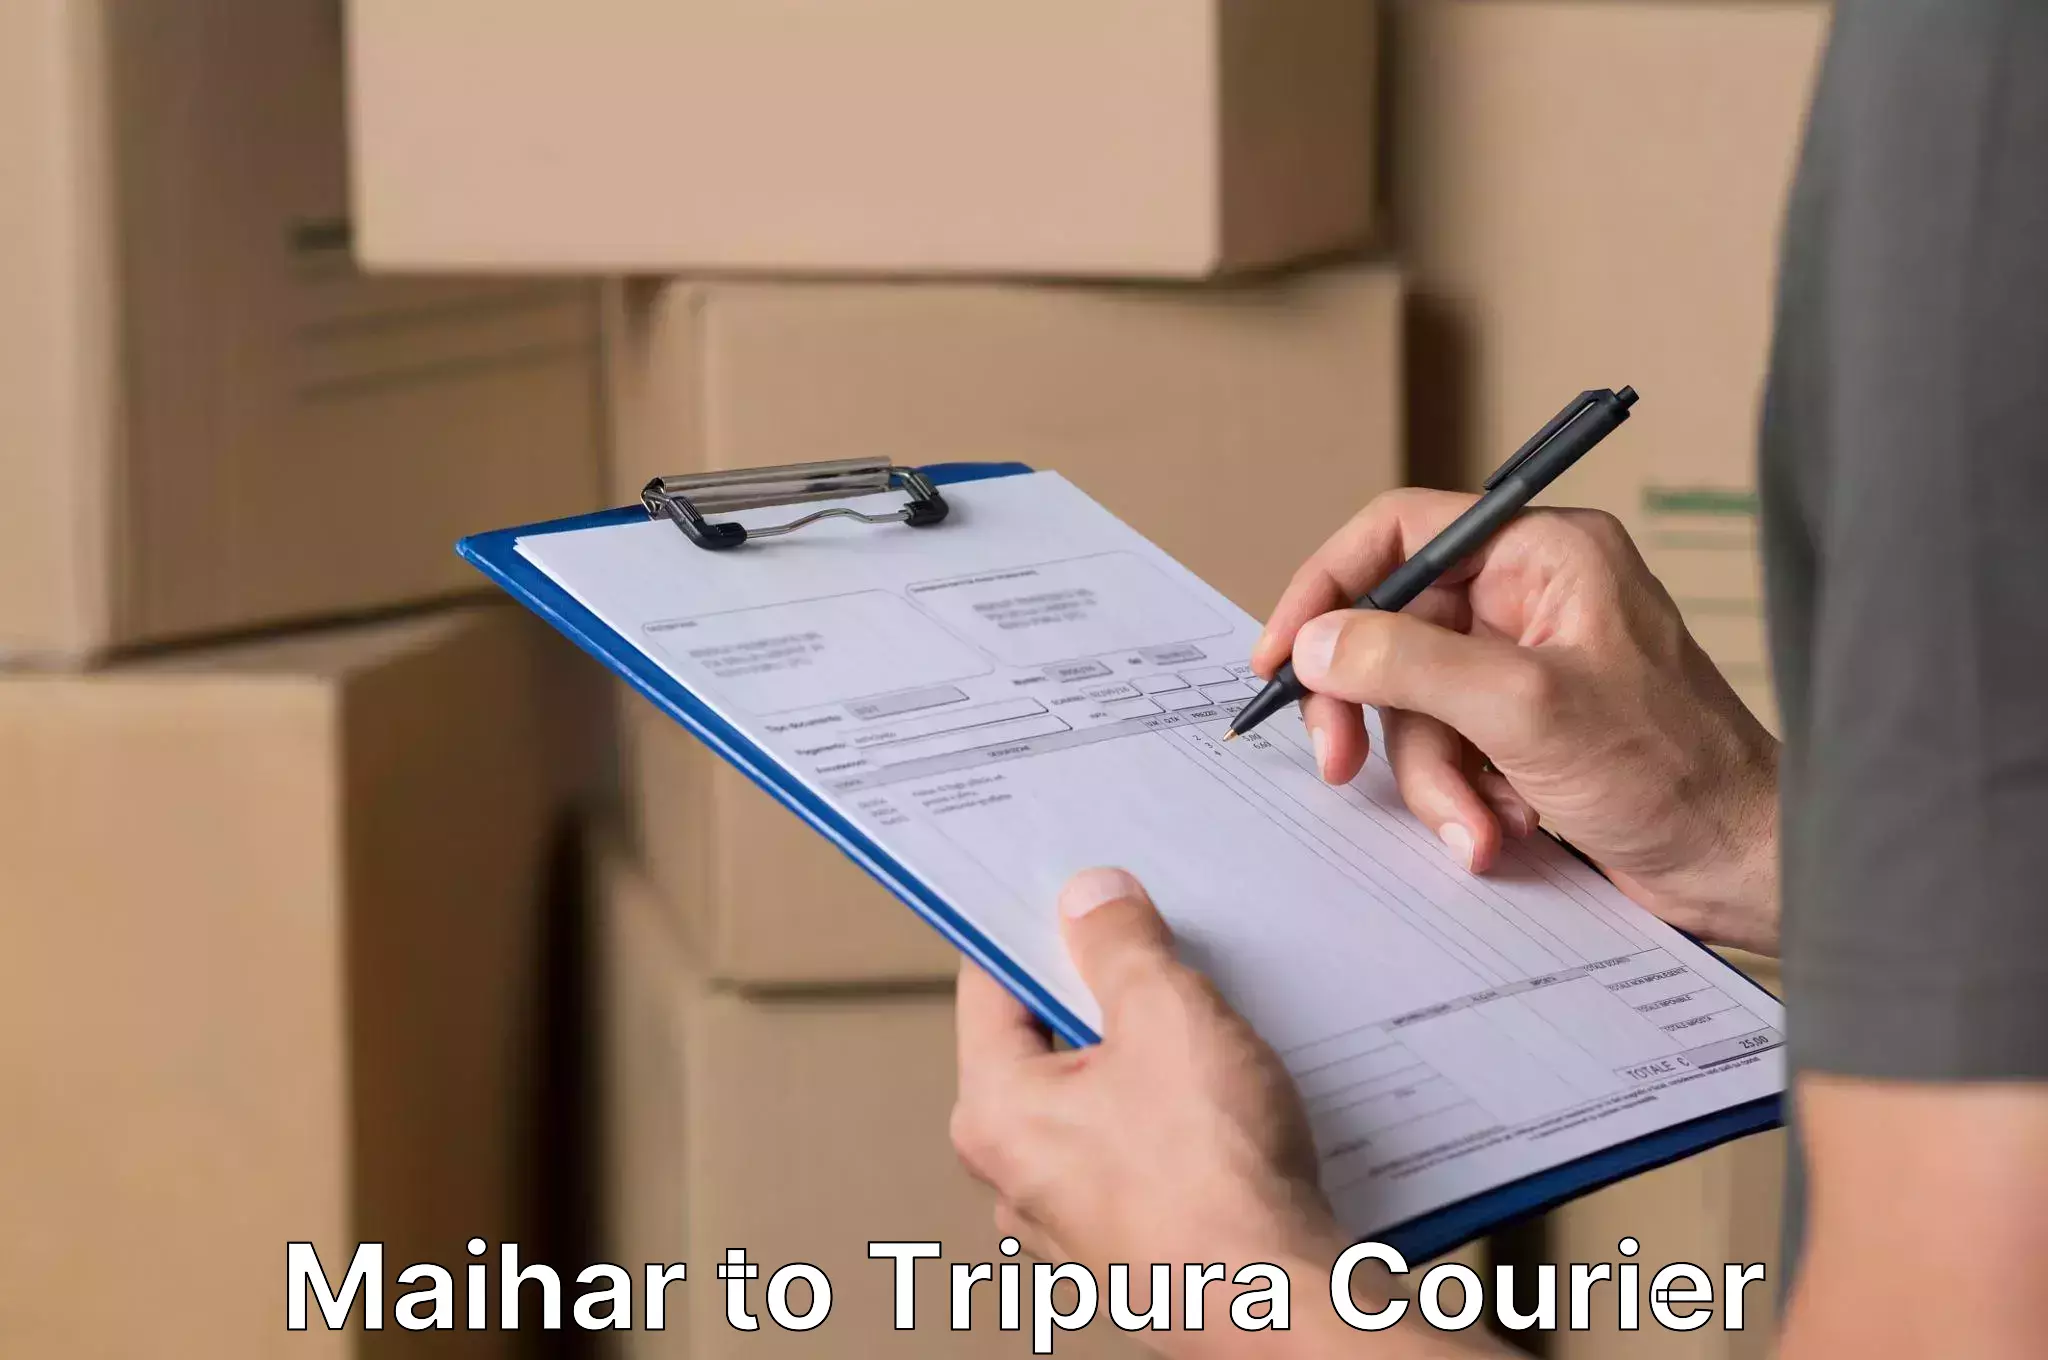 Professional furniture transport Maihar to Udaipur Tripura